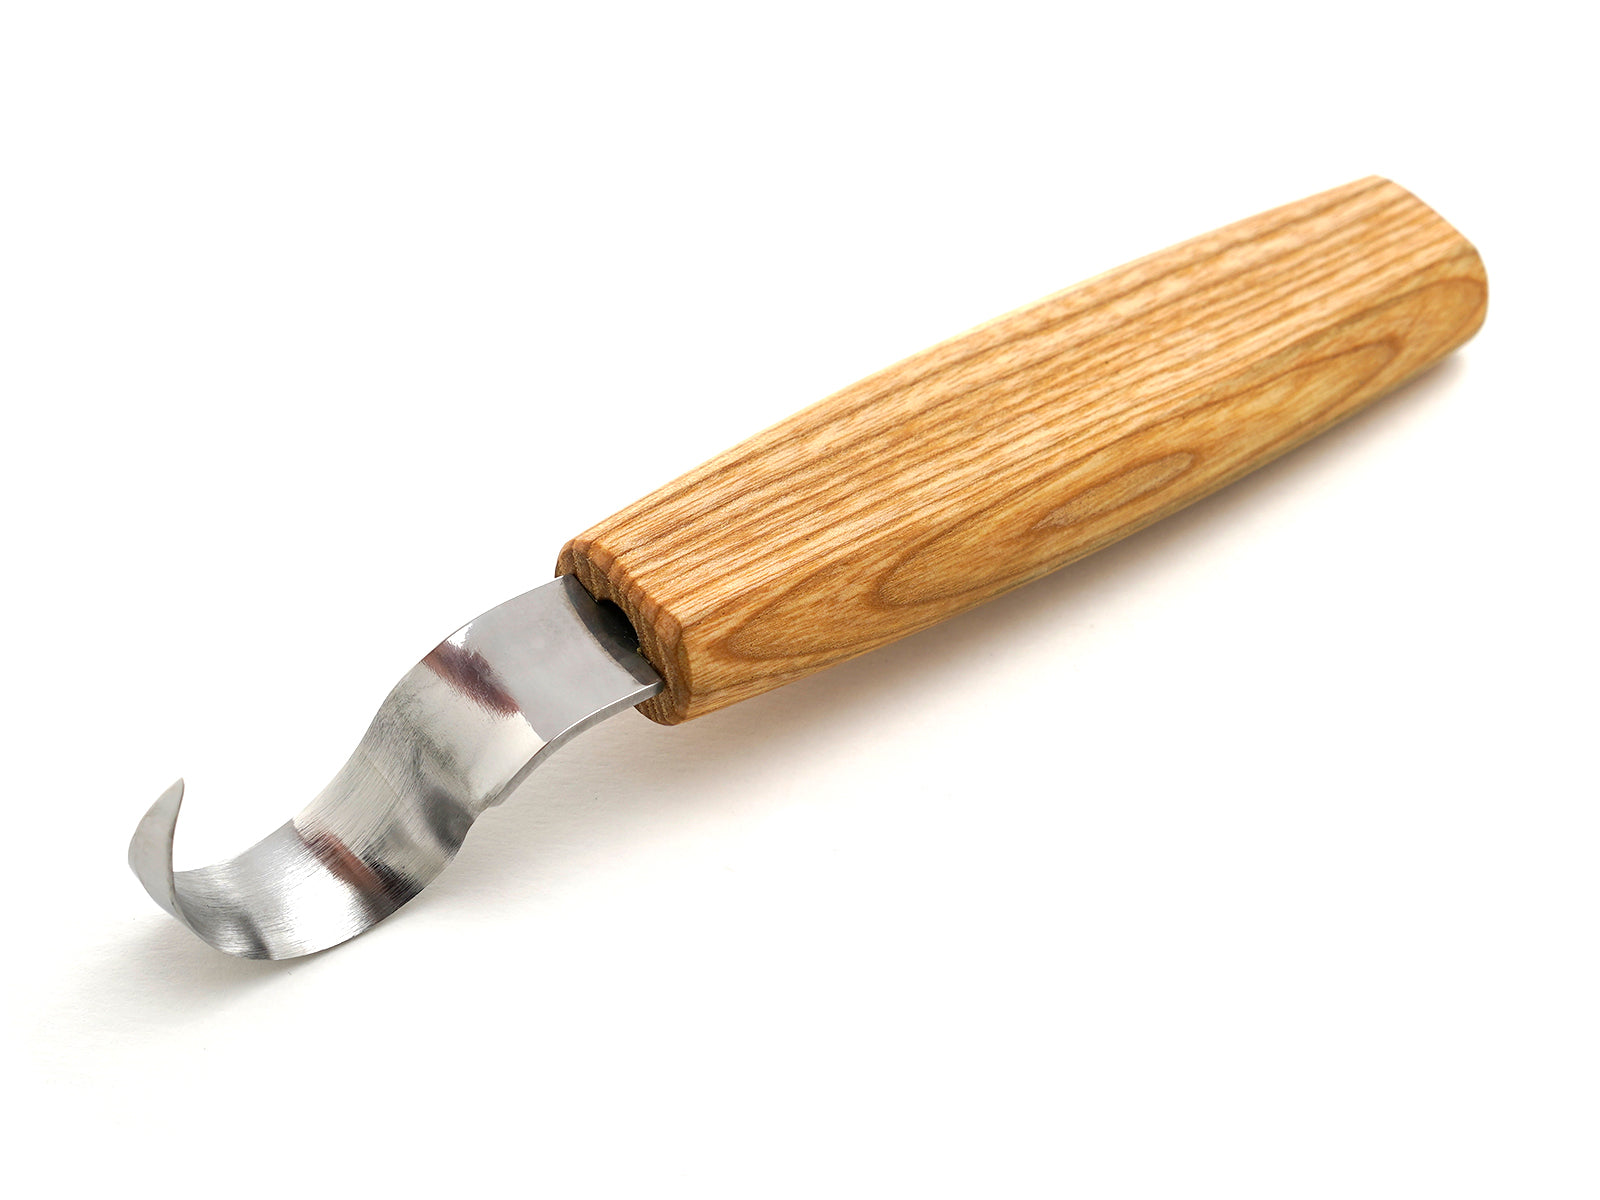 BeaverCraft SK1S Oak Hook Spoon Carving Knife with Leather Sheath